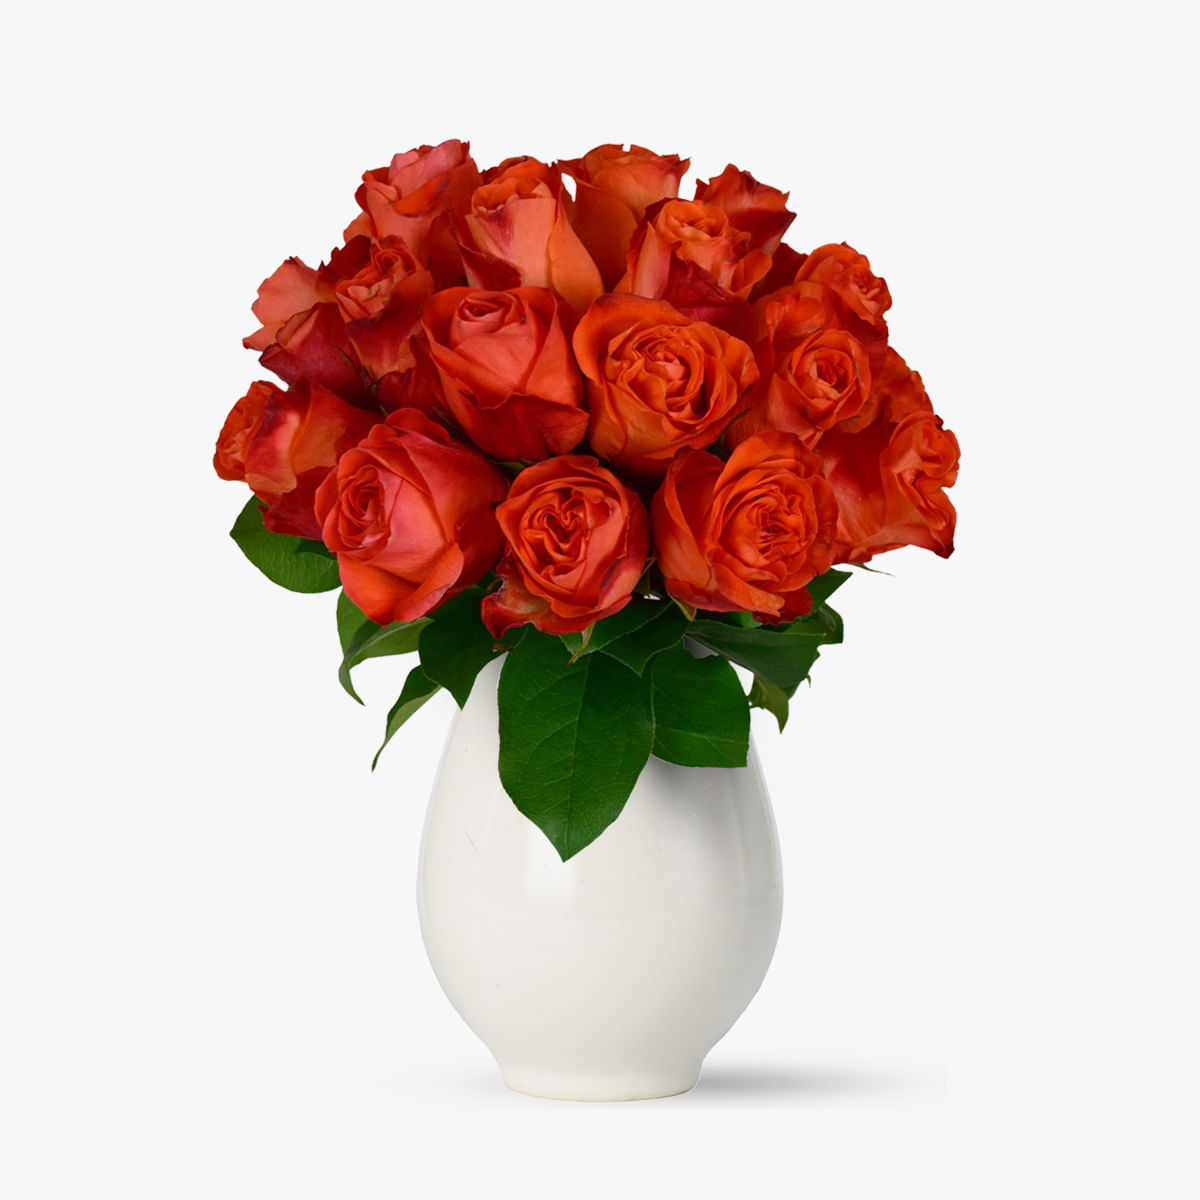 Buchet de 17 trandafiri portocalii – Standard Buchet